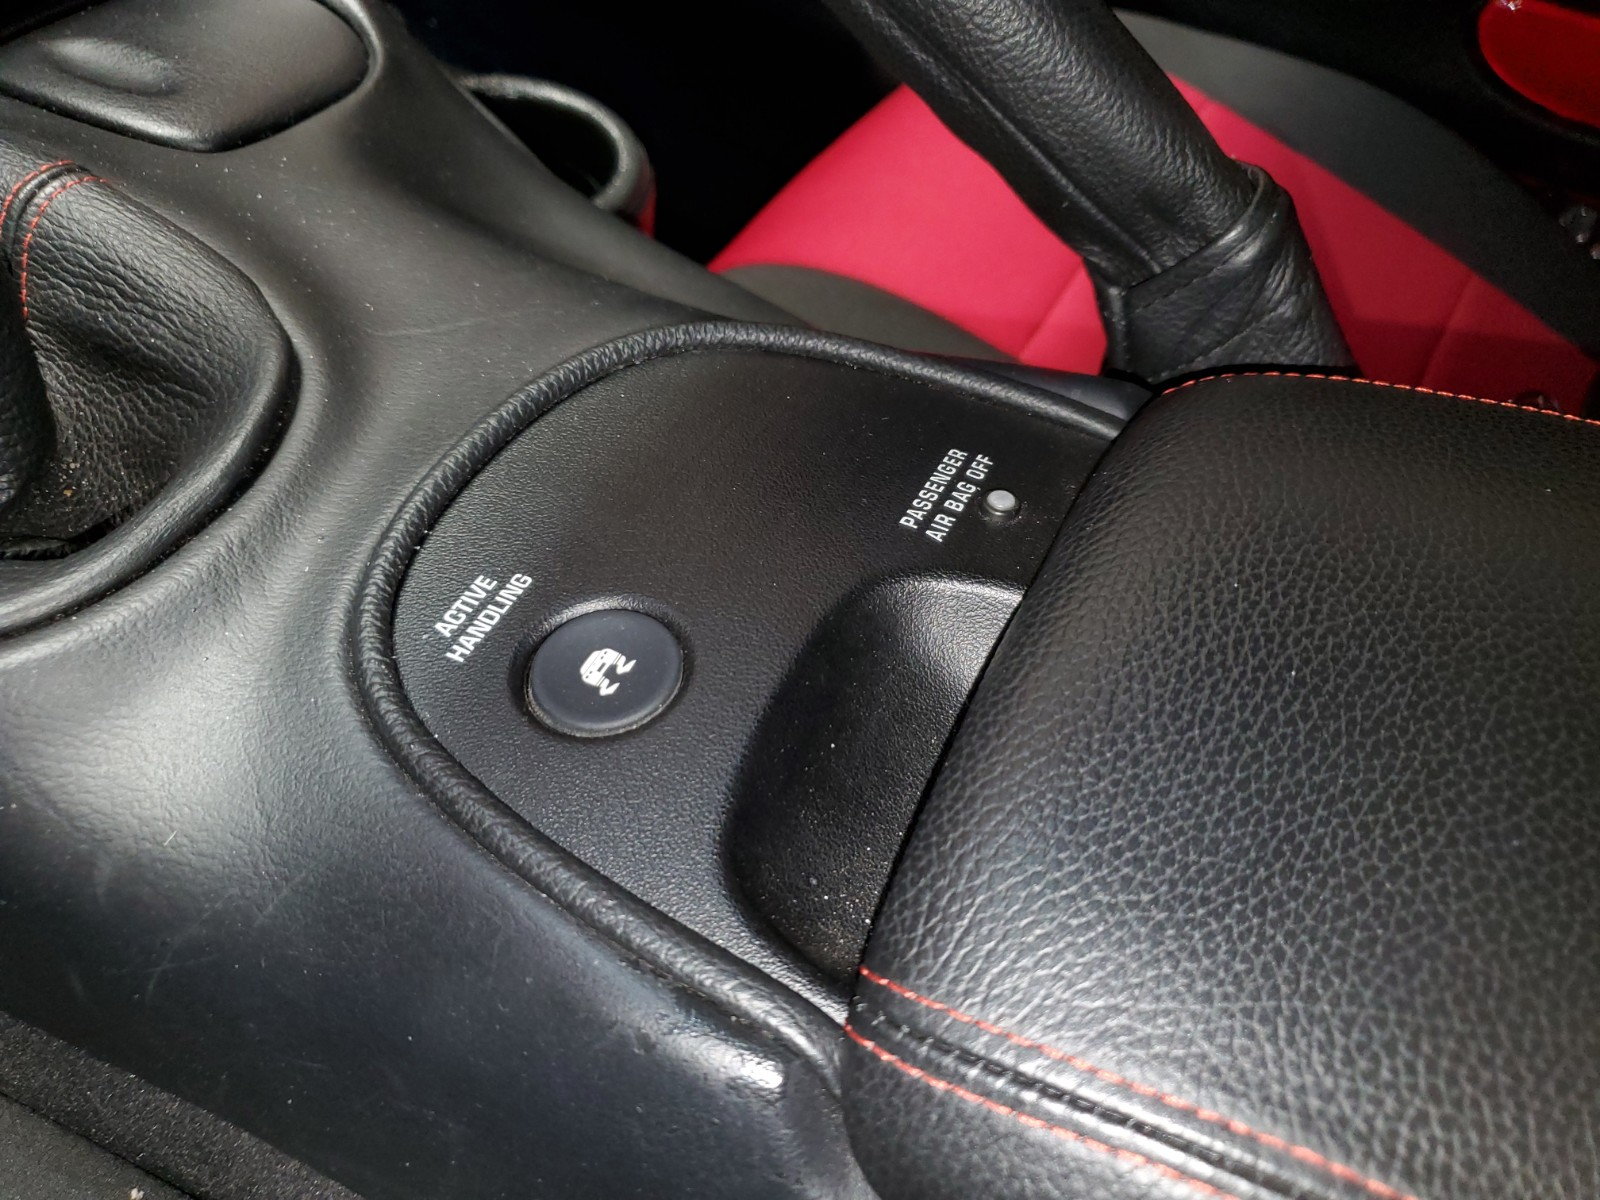  - Redline Goods Black/Red Leather Interior Accessories for C5 Corvette w/ Armrest Assy - Tucson, AZ 85712, United States